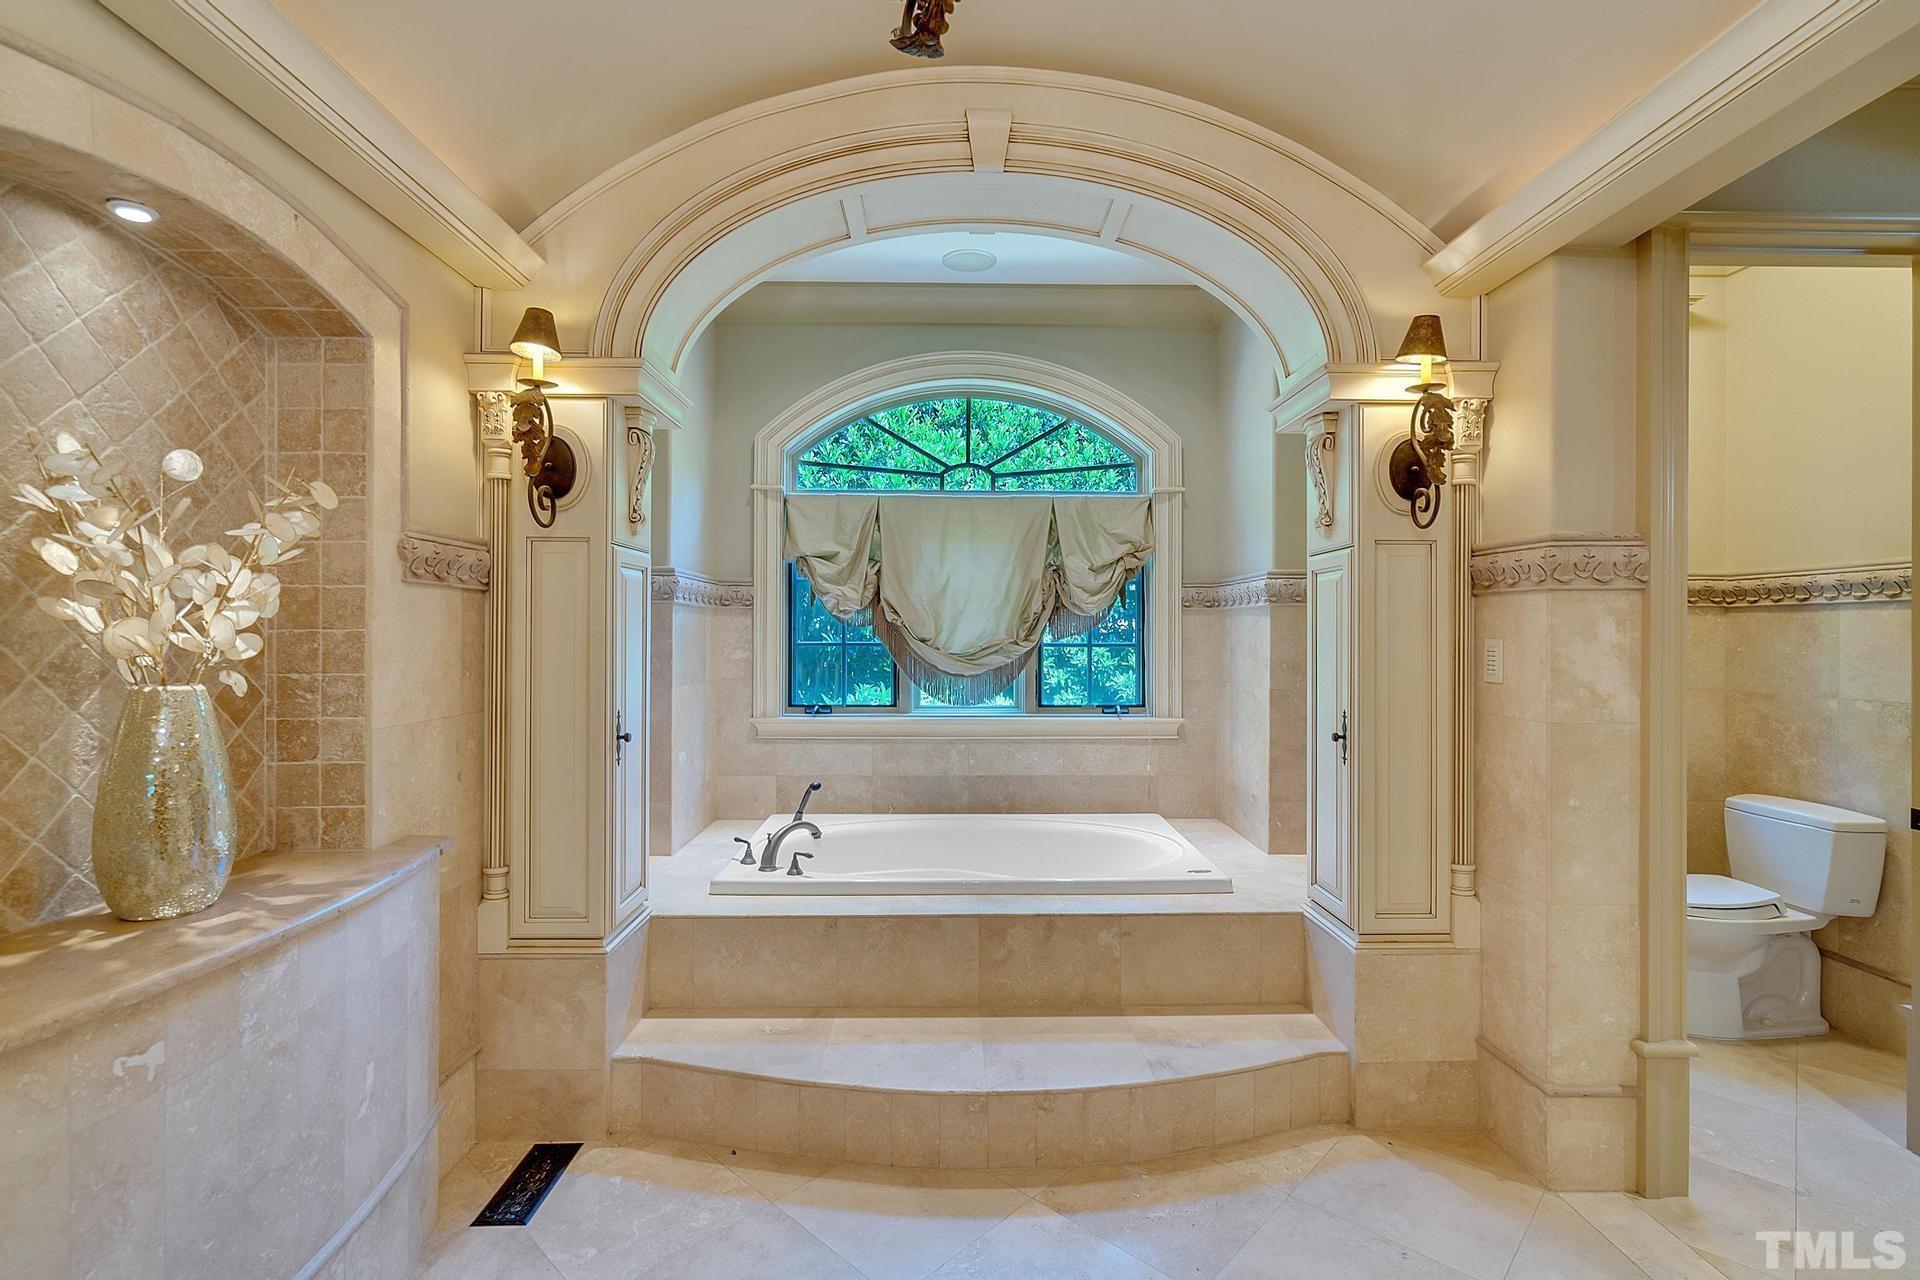 Luxurious spa bathroom with a jacuzzi tub.